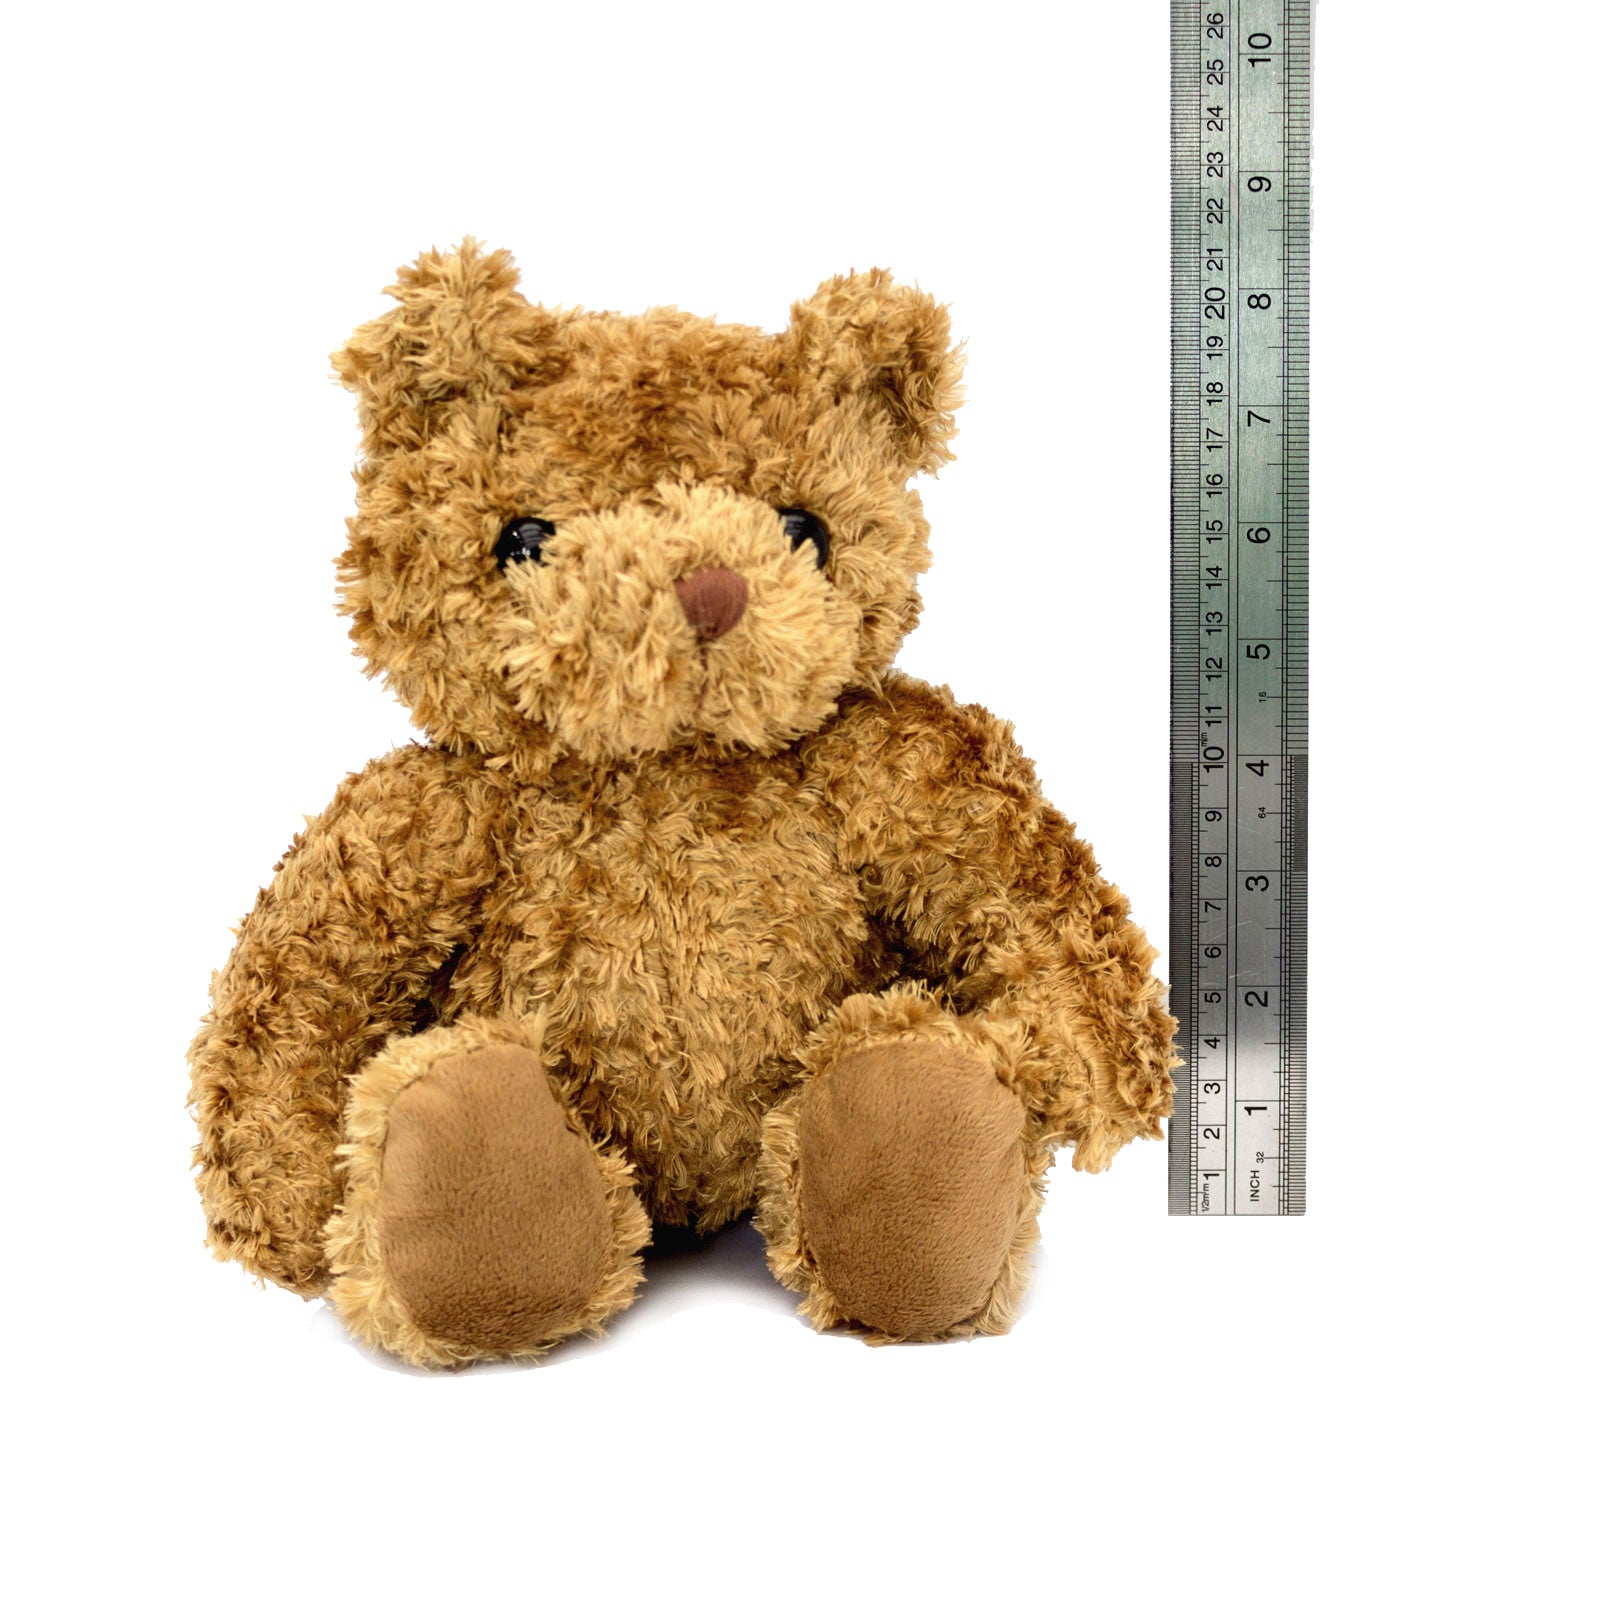 I Love Knitting - Teddy Bear